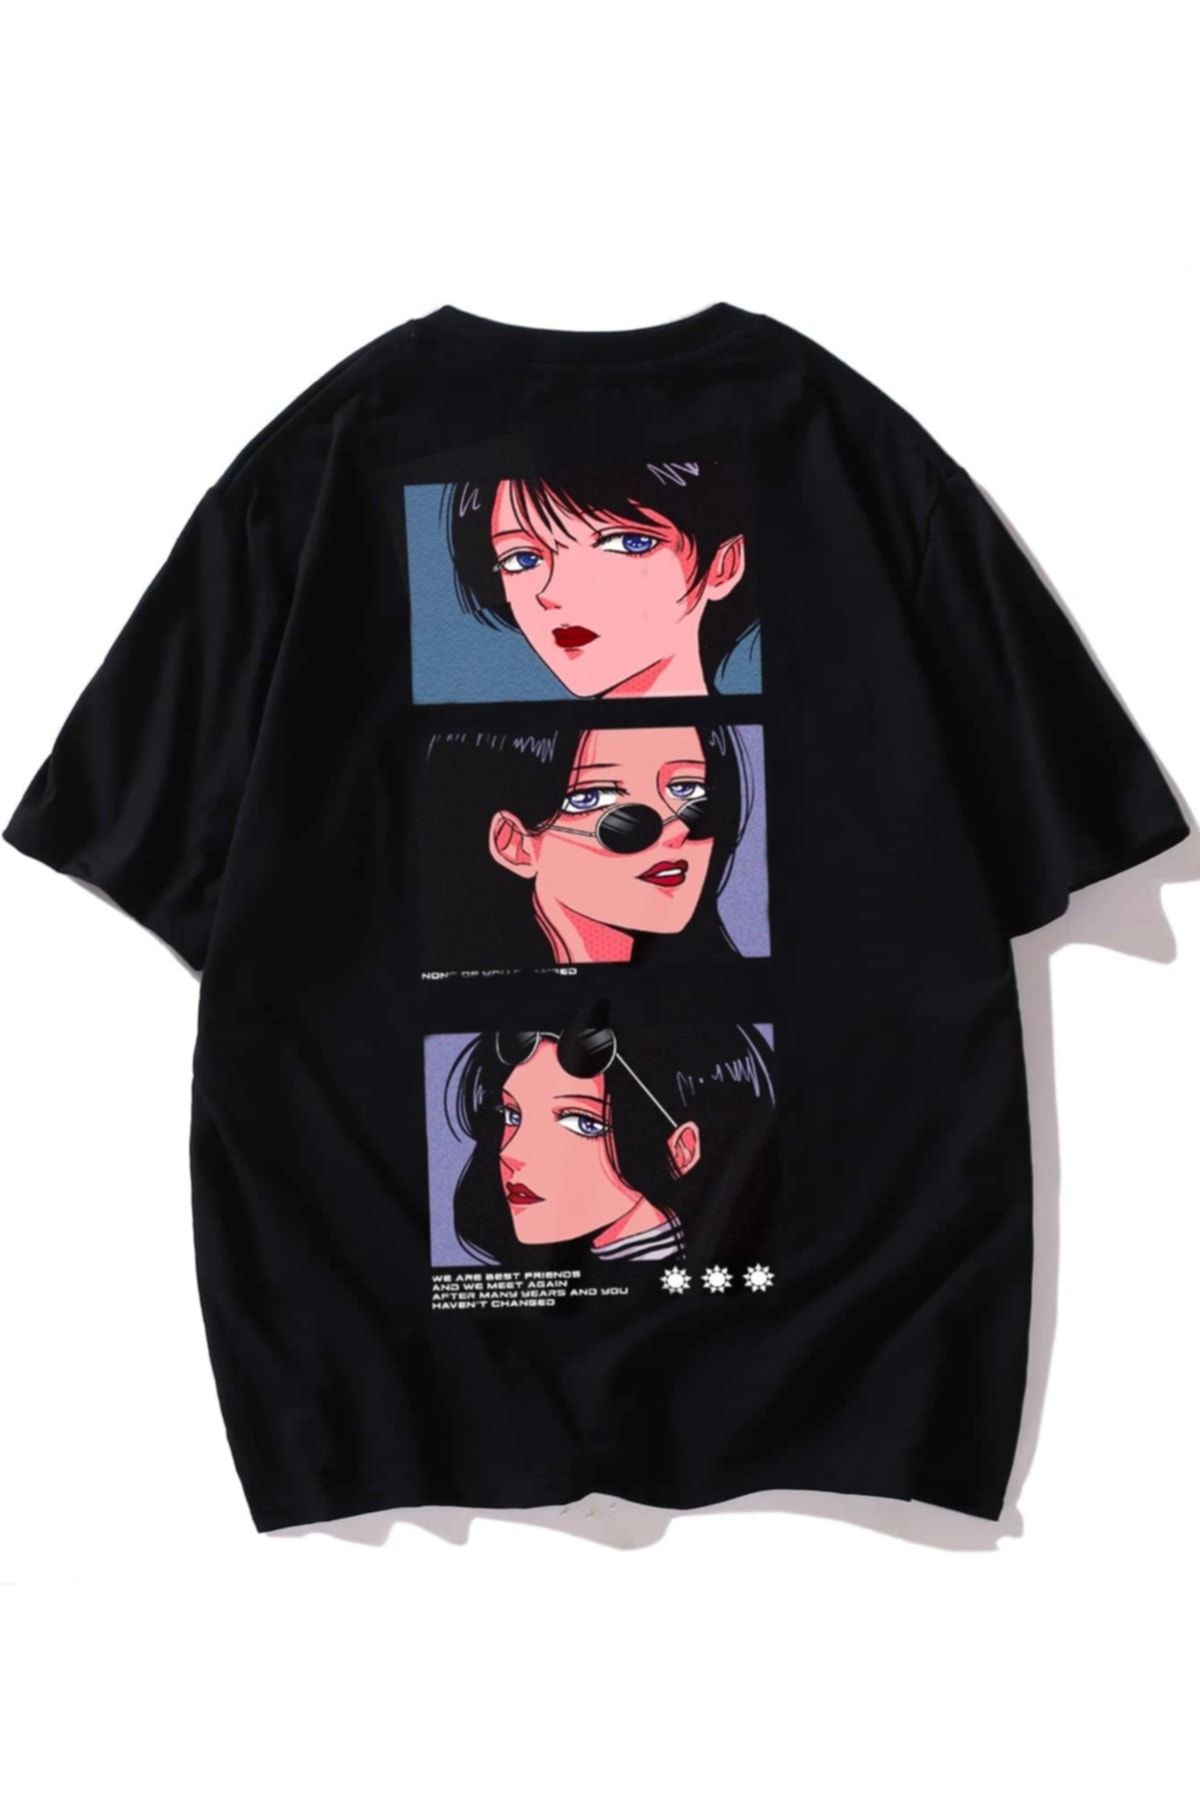 VBSVİBES Kadin Siyah Oversize Anime Baskılı T-shirt